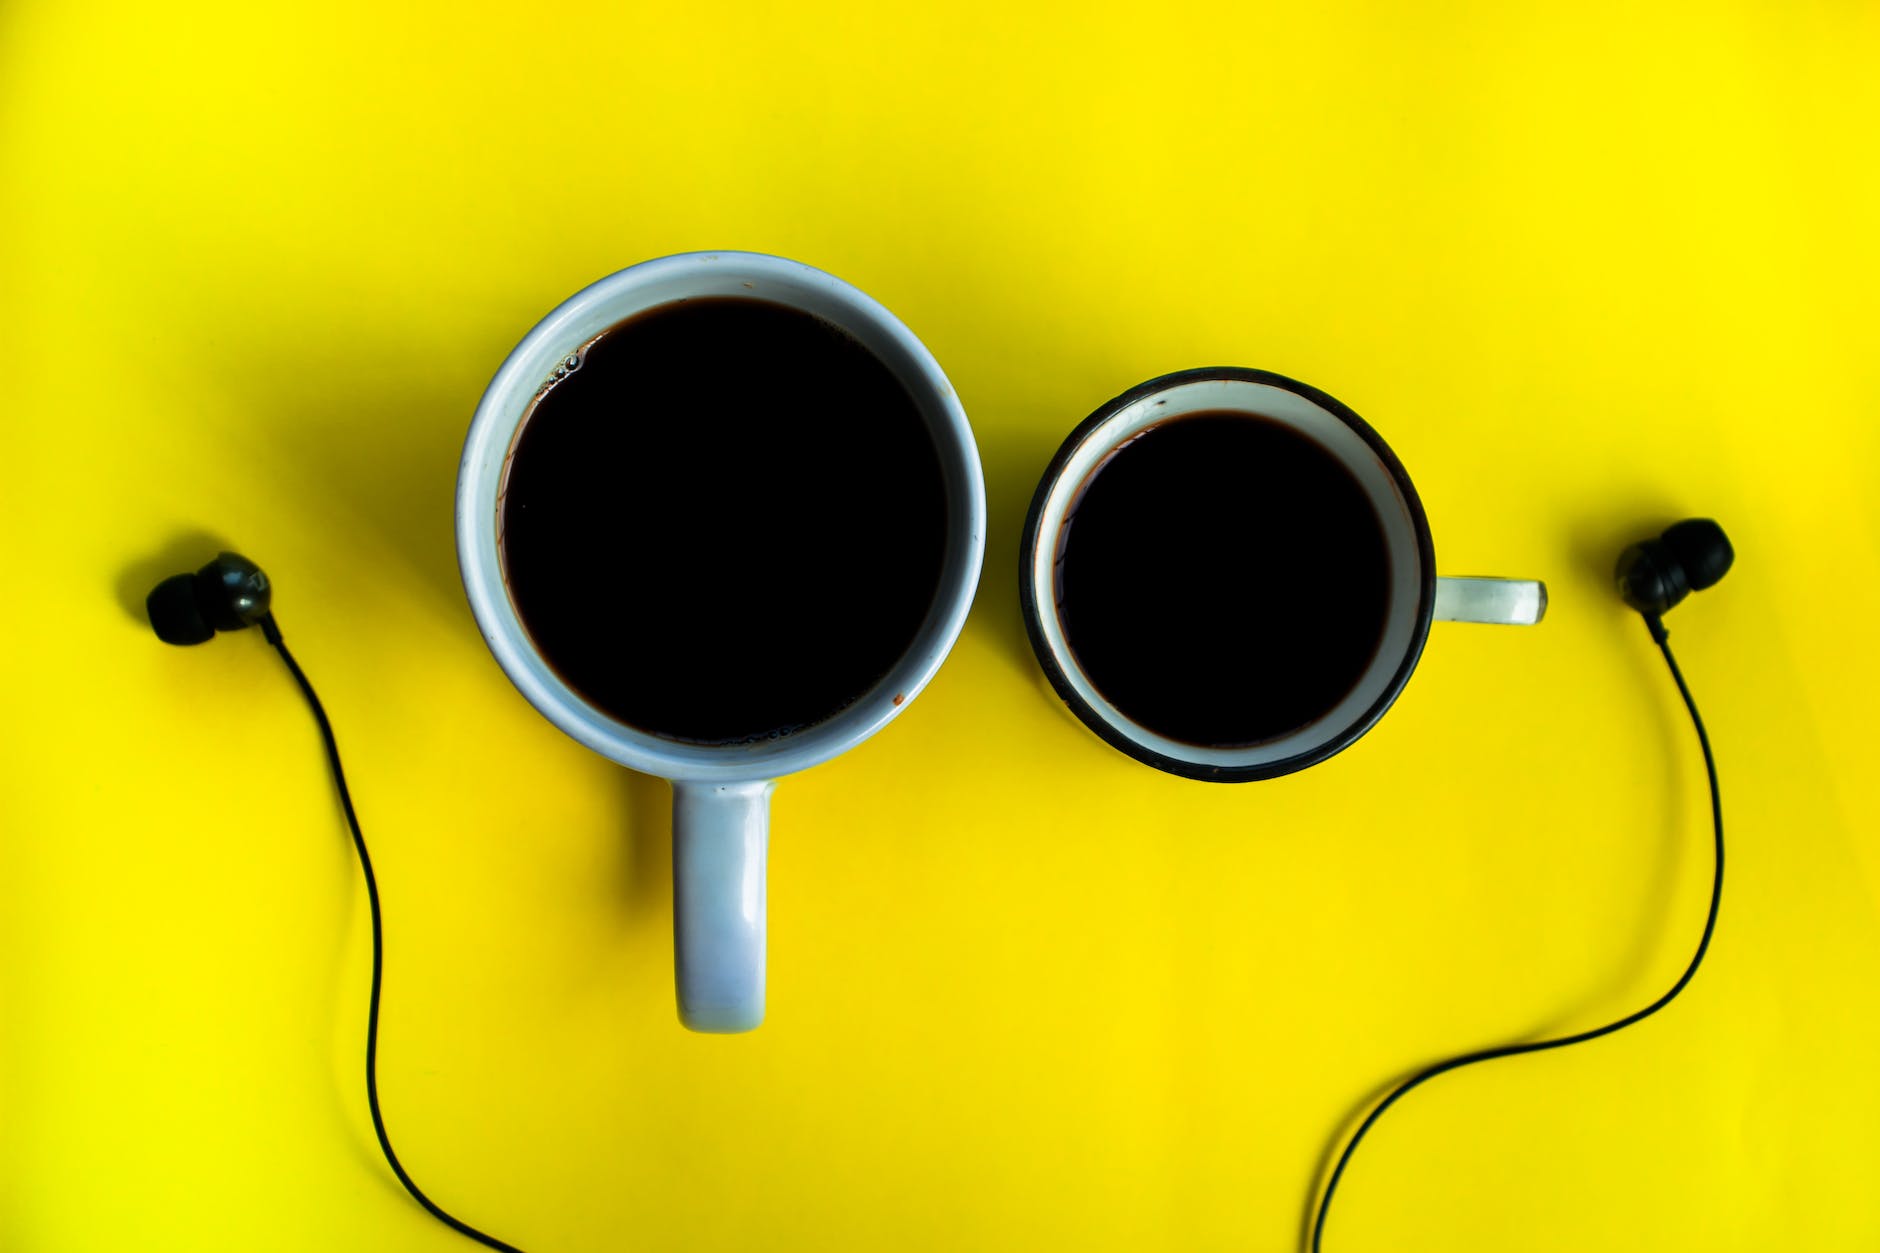 mugs with coffee near earphones on yellow background